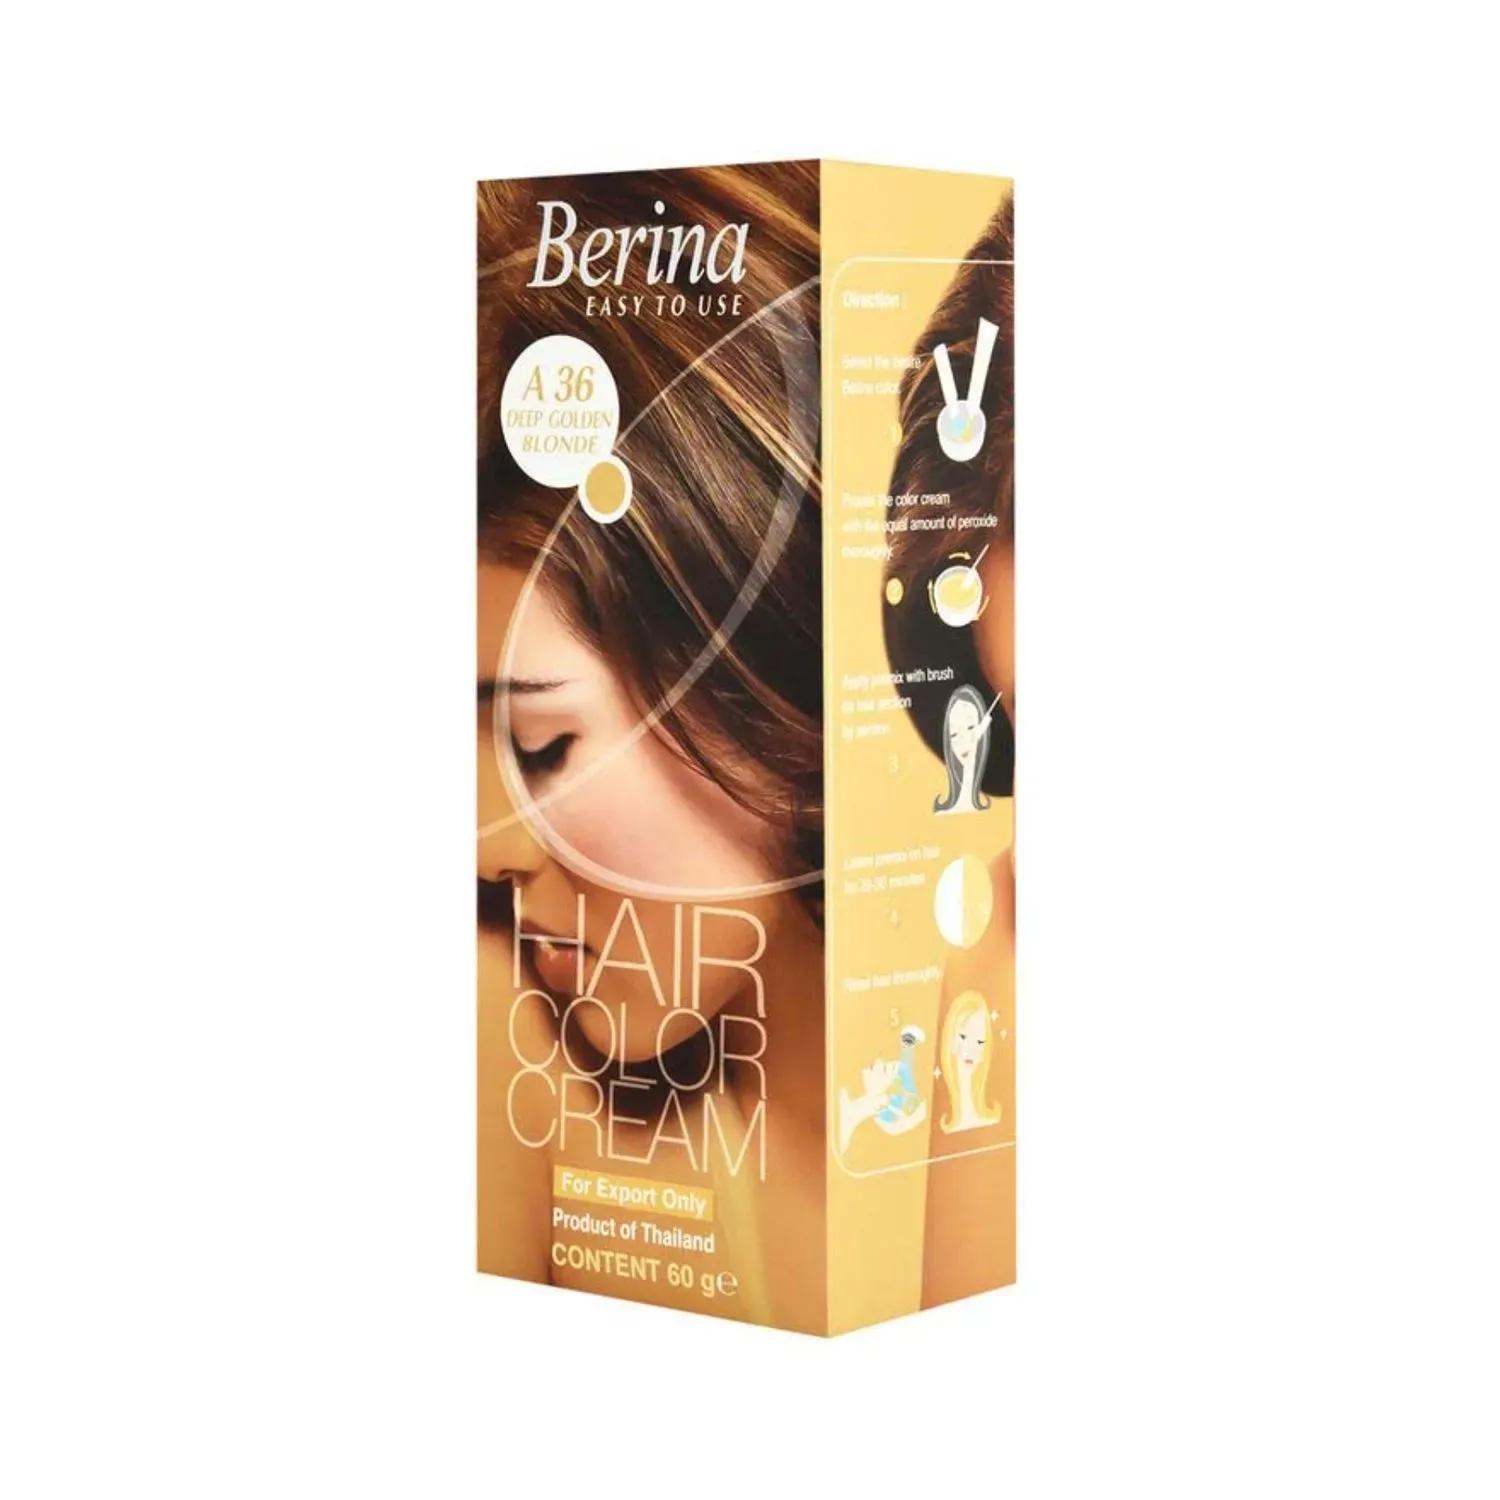 berina cream hair color - a36 deep golden blonde (60g)